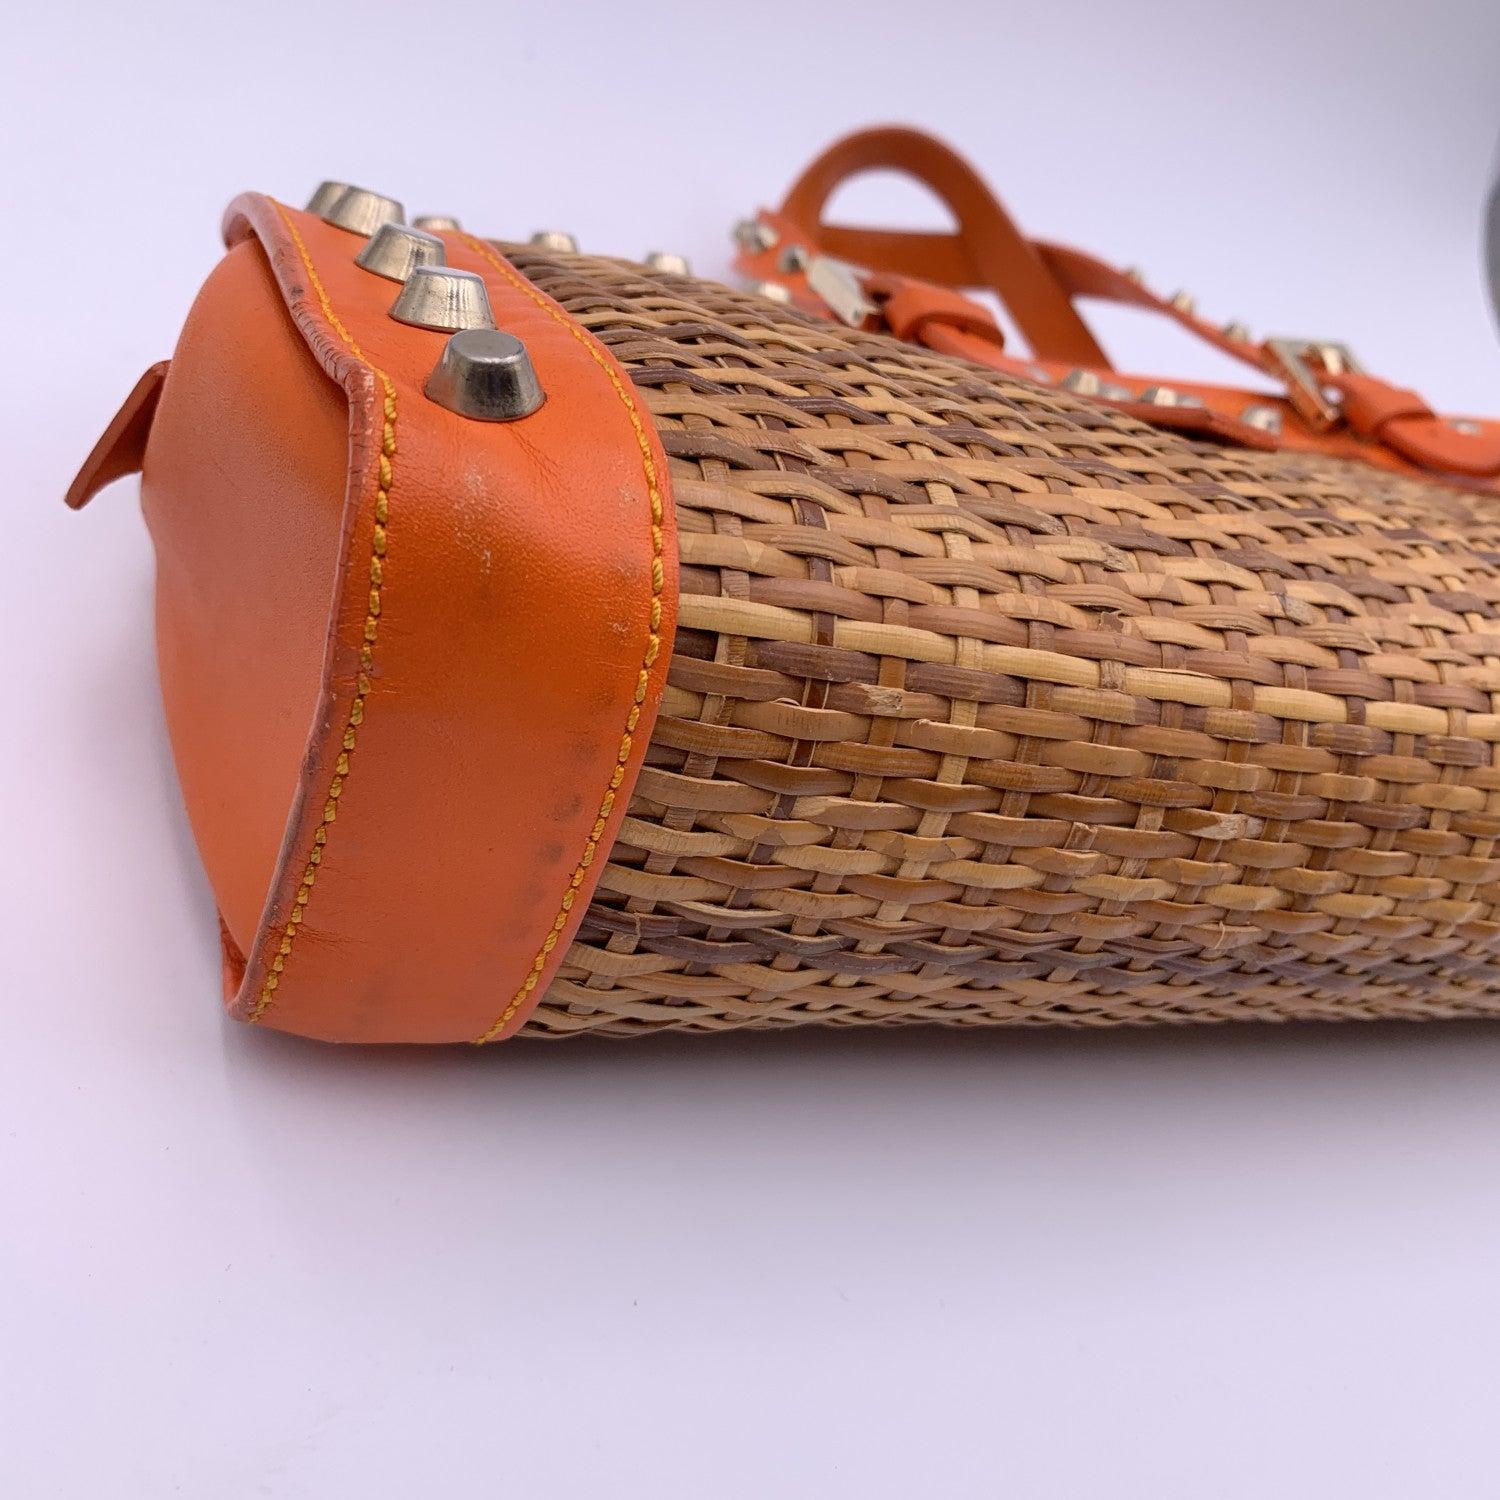 Women's Fendi Wicker and Orange Leather Studded Tote Handbag Satchel For Sale